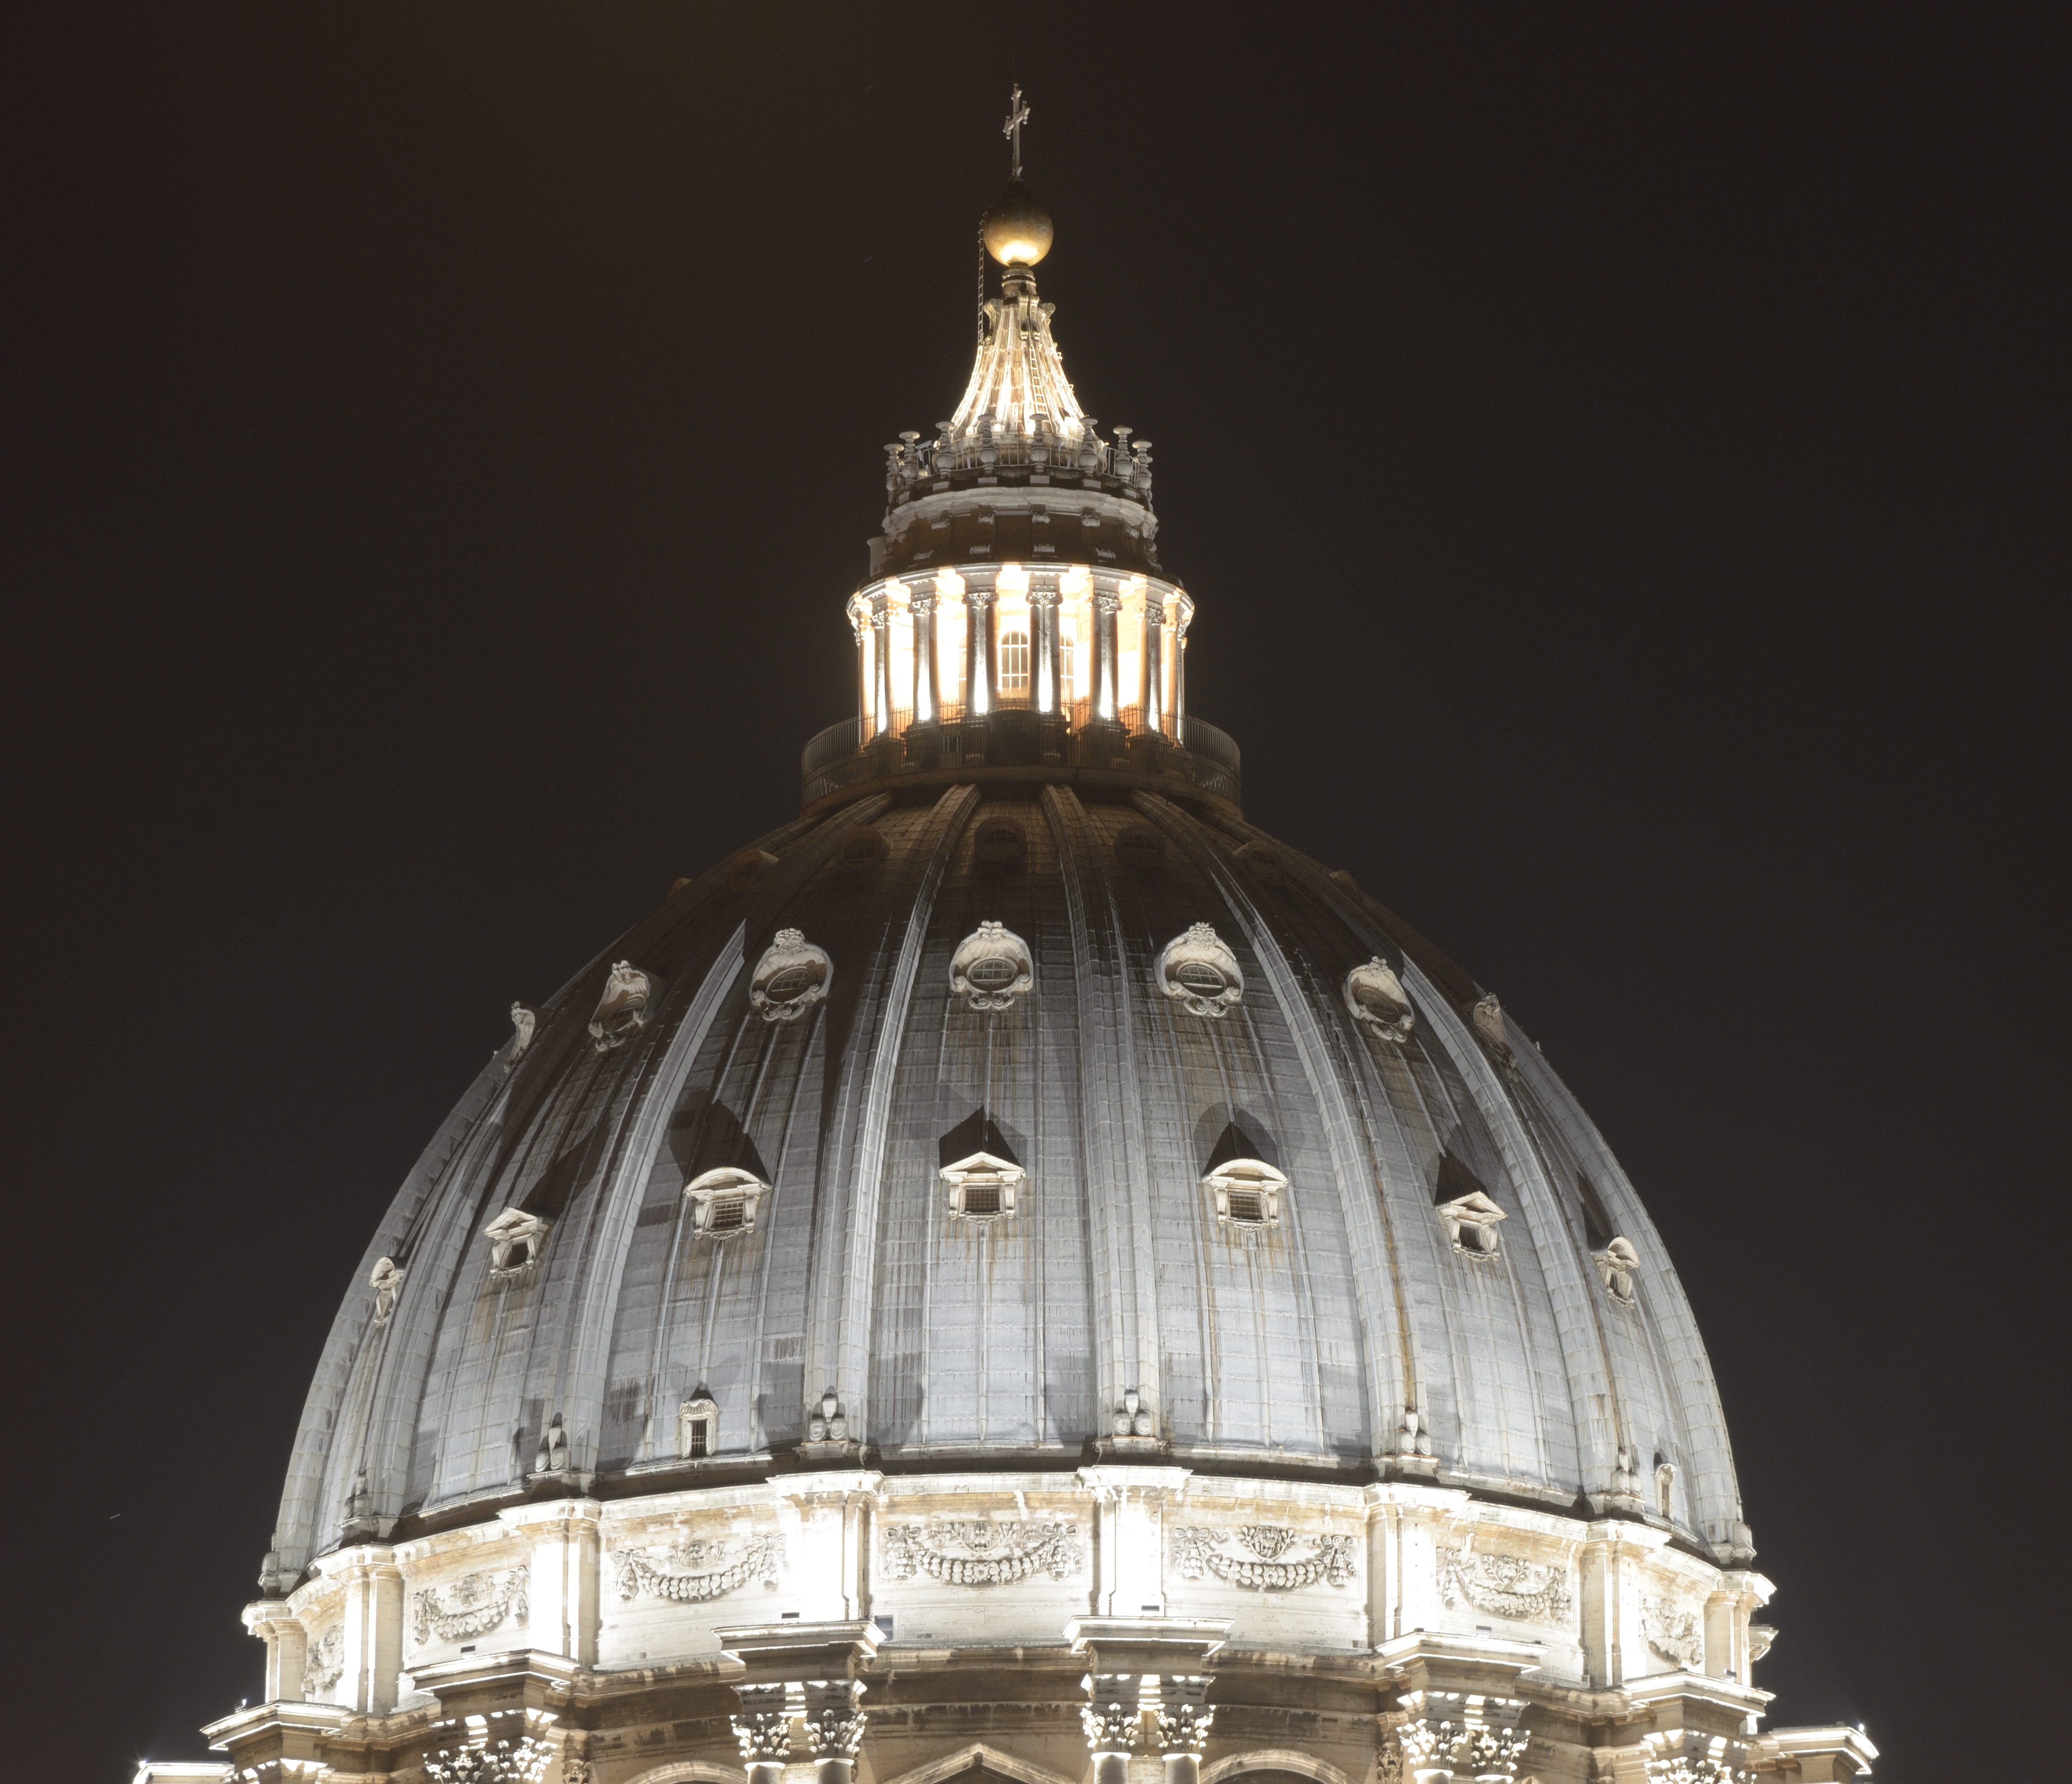 Dome of Saint Peter's Basilica (exterior) at night